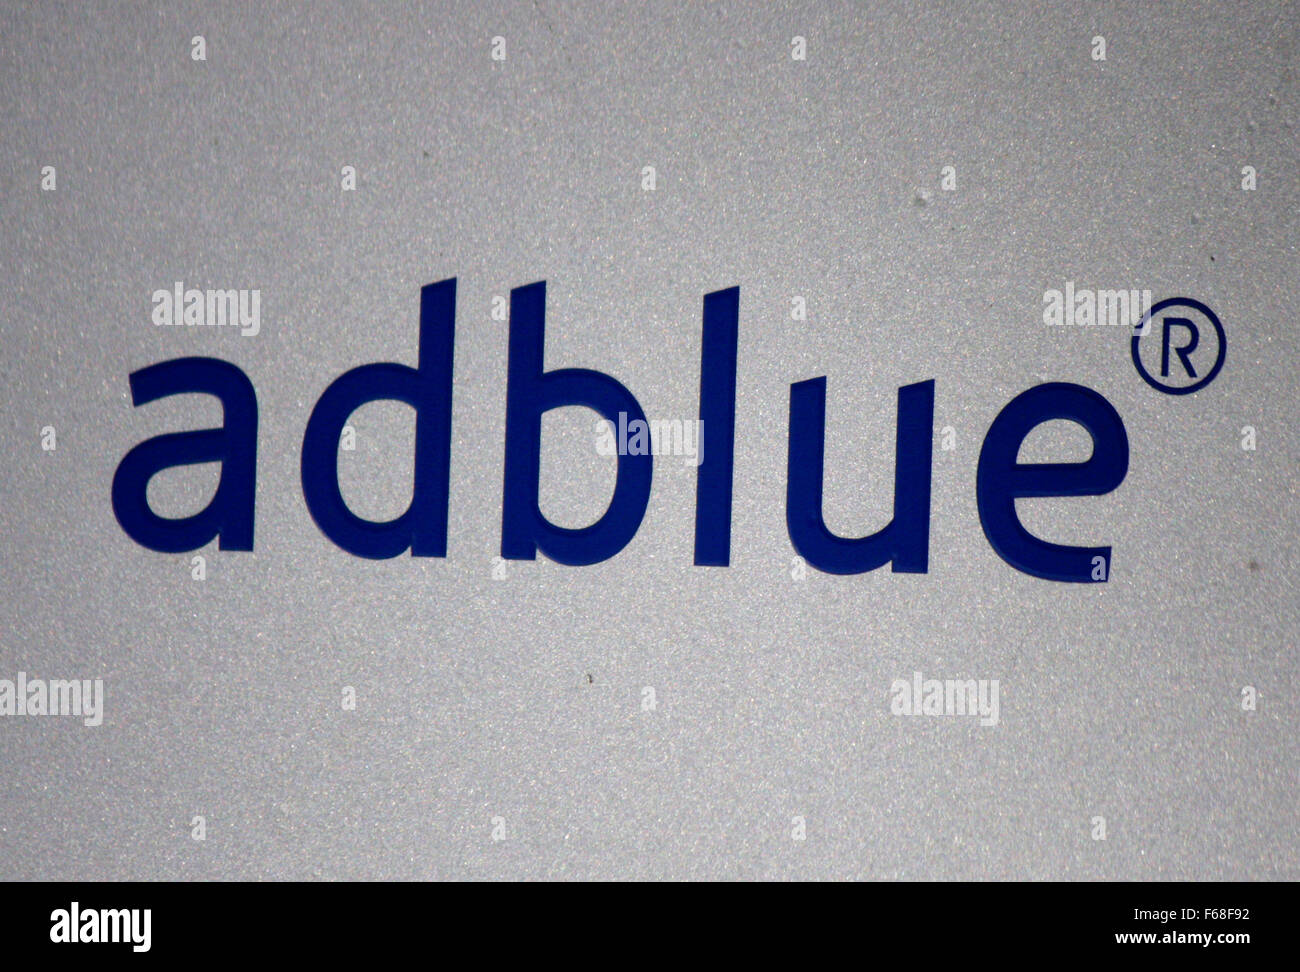 Markenname: "Adblue", Berlin. Stockfoto